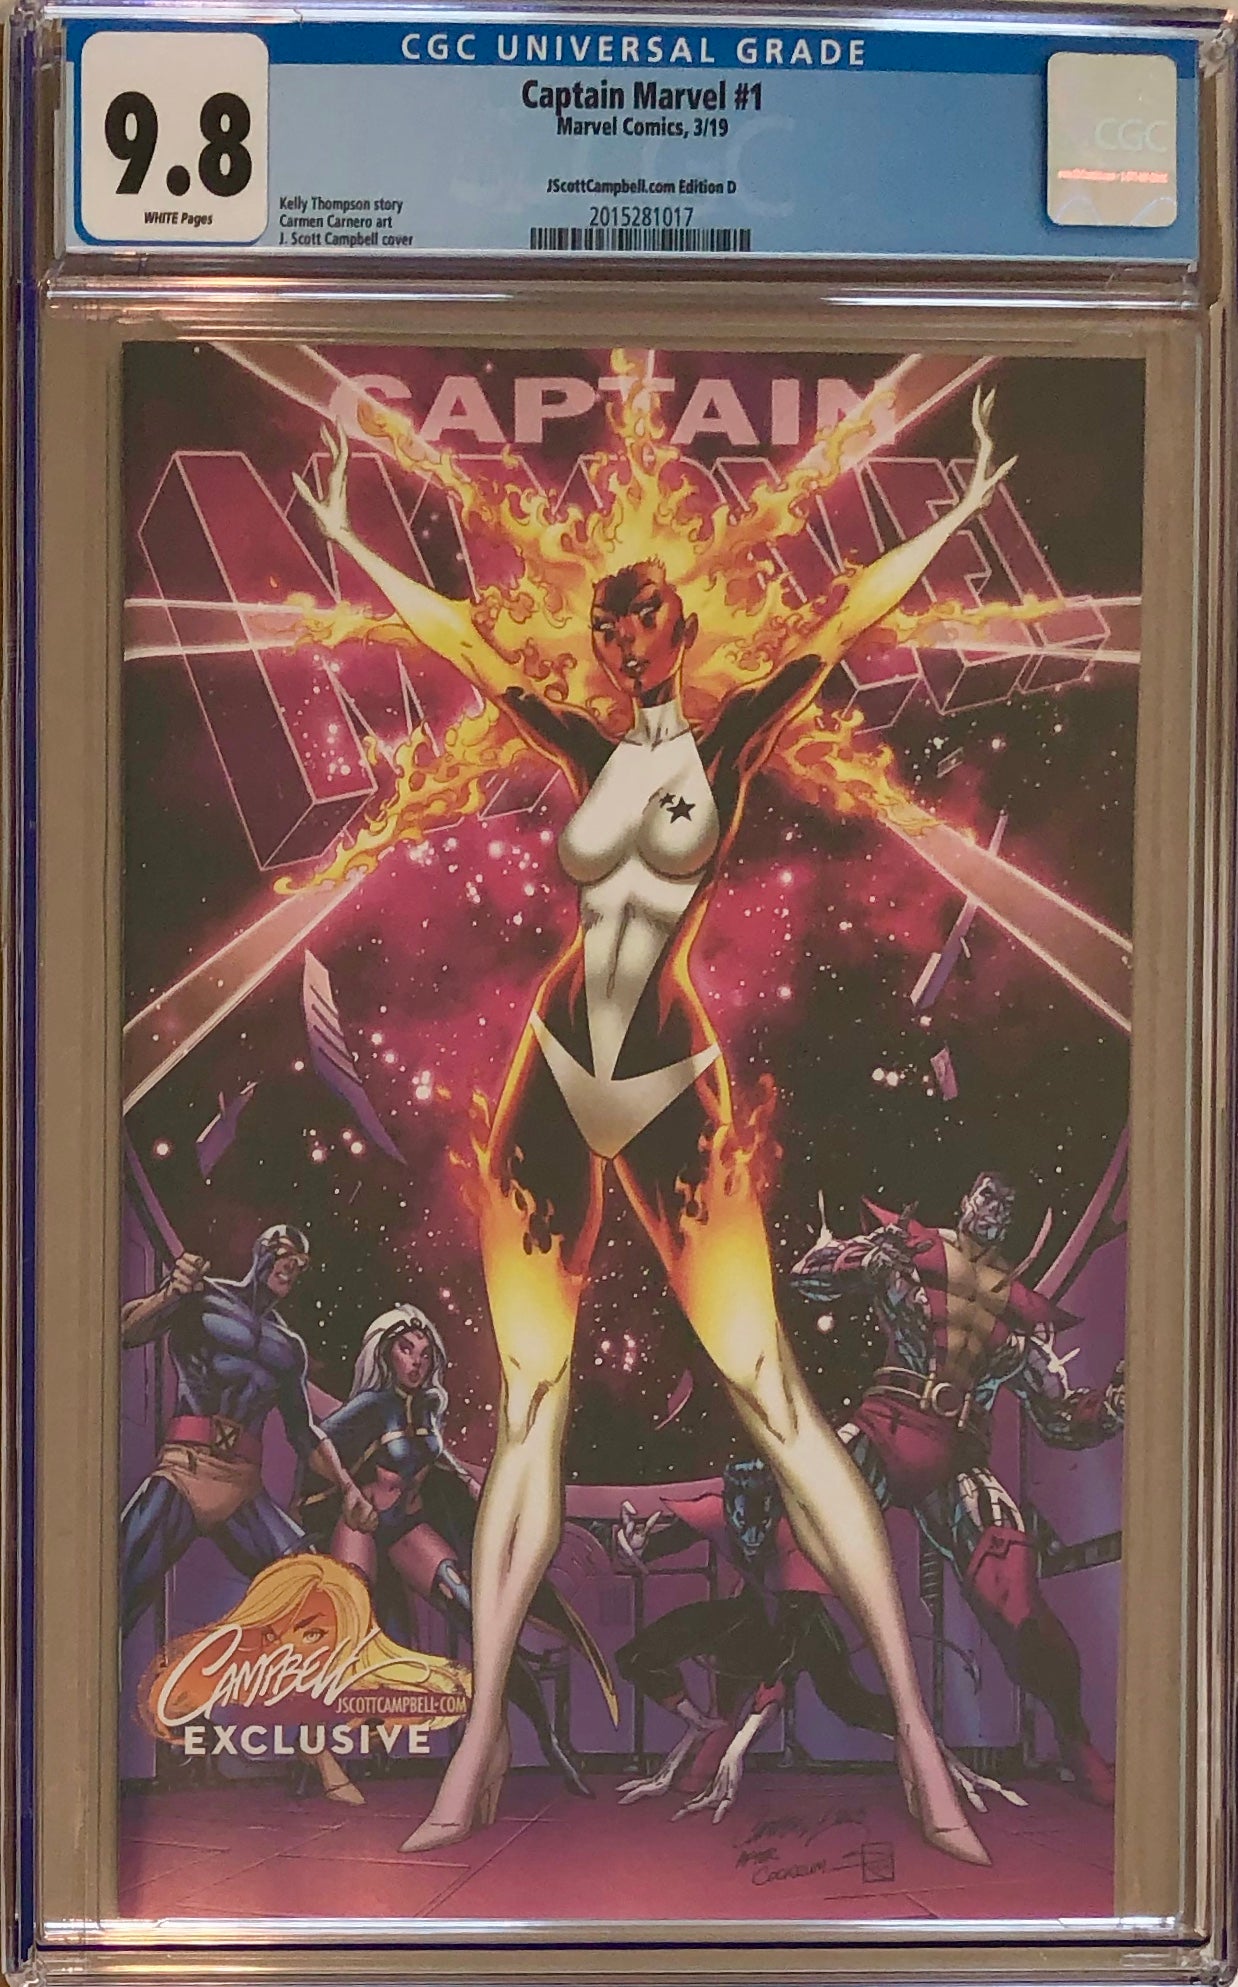 Captain Marvel #1 J. Scott Campbell Edition D "Binary" Exclusive CGC 9.8